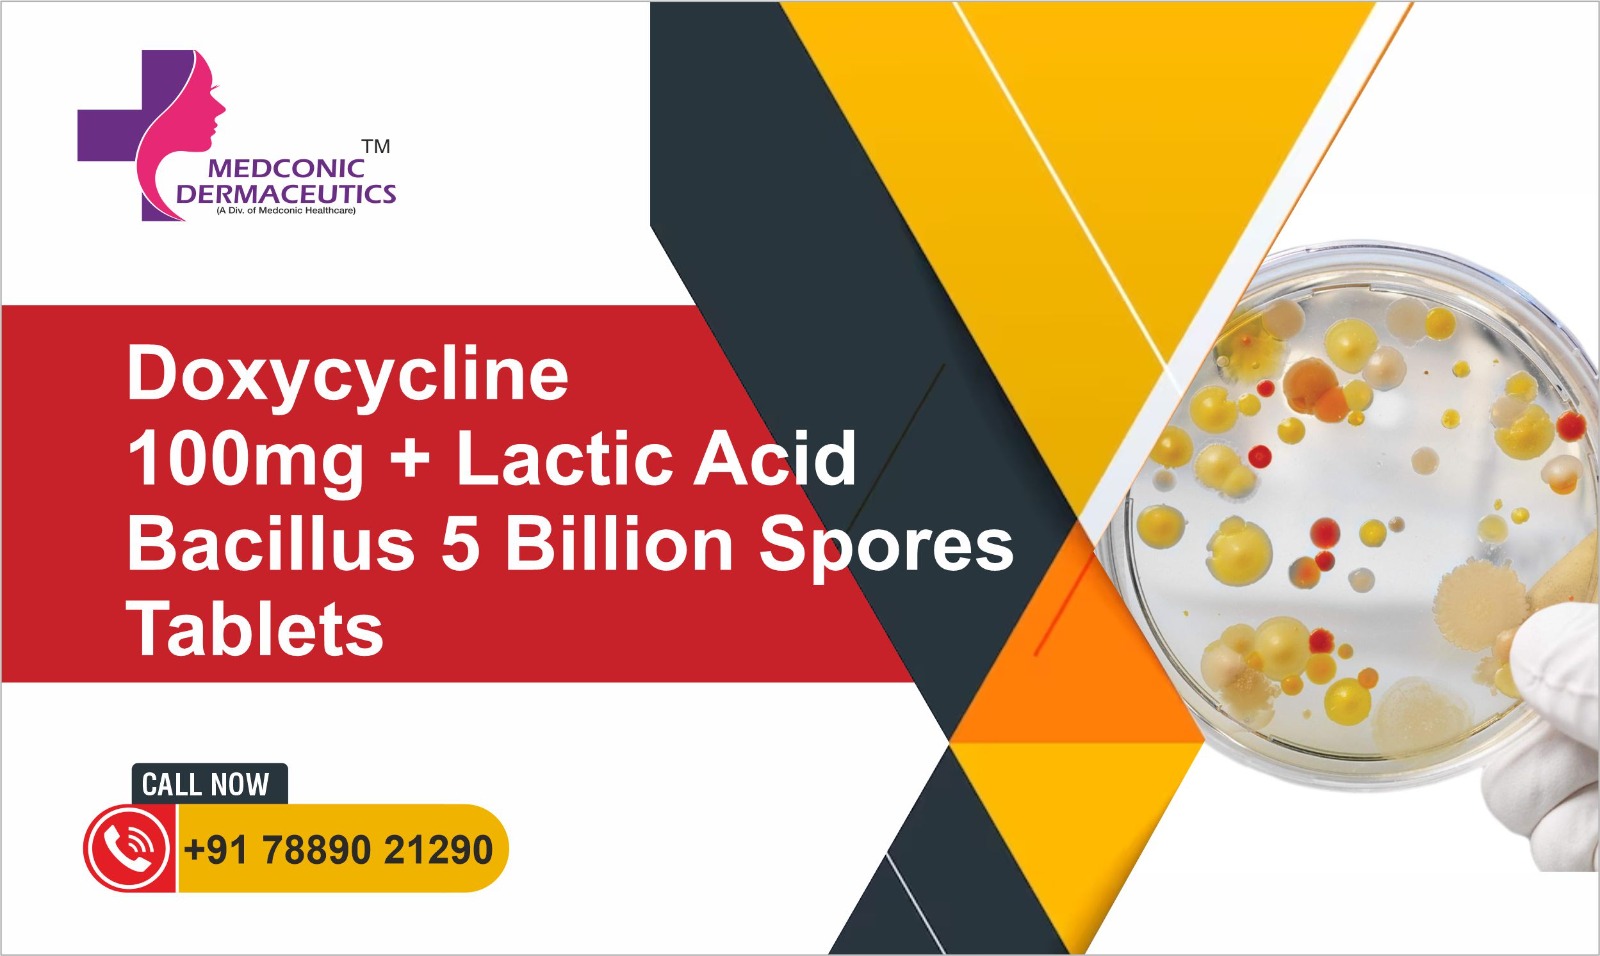 Doxycycline & Lactic Acid Bacillus Spores Tablets